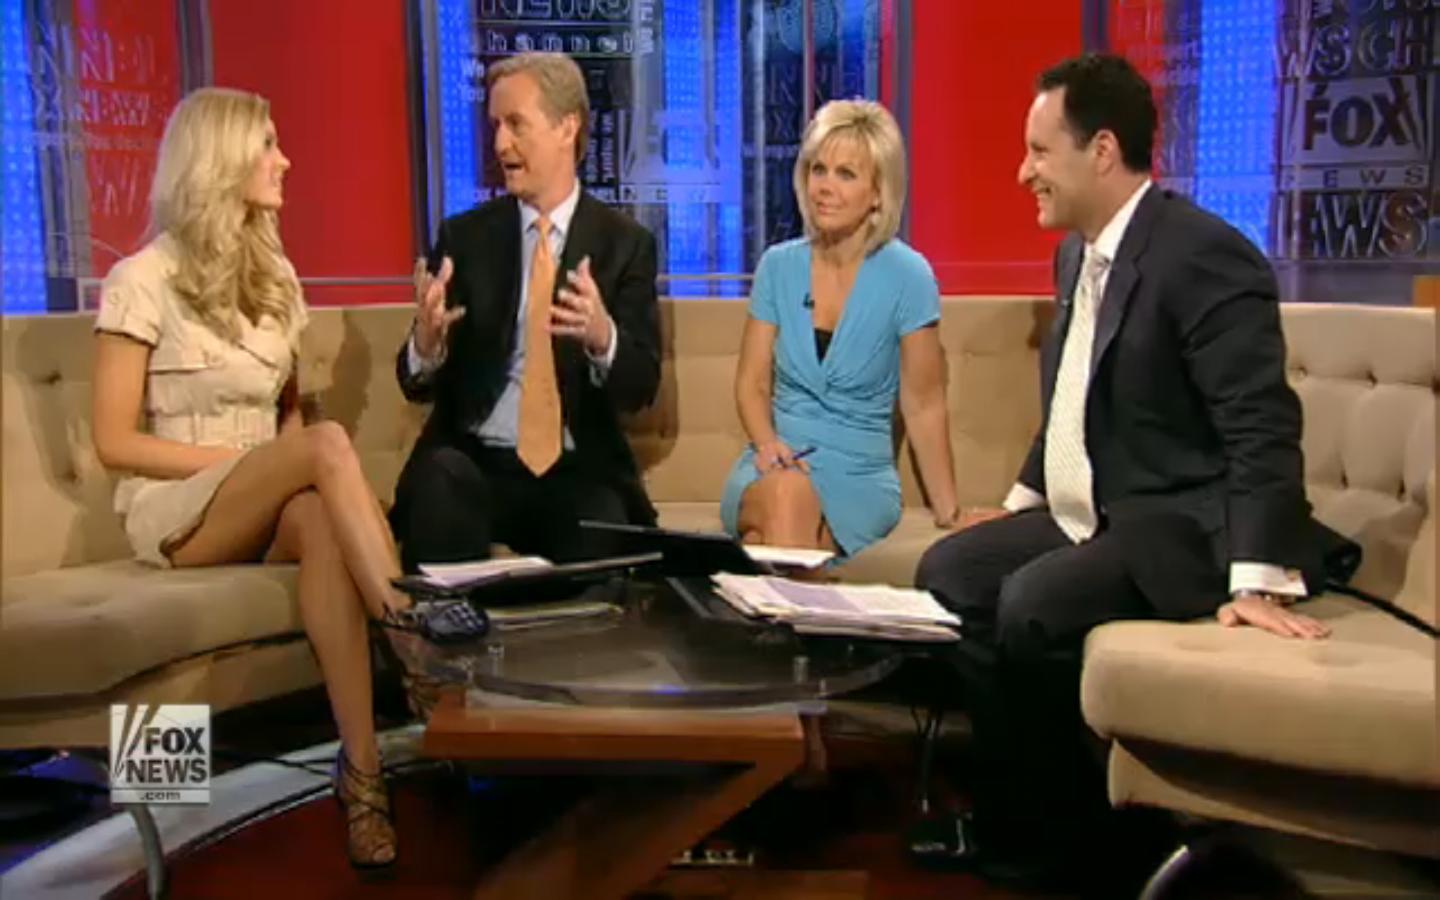 Fox news ladies up skirt - Sex photo